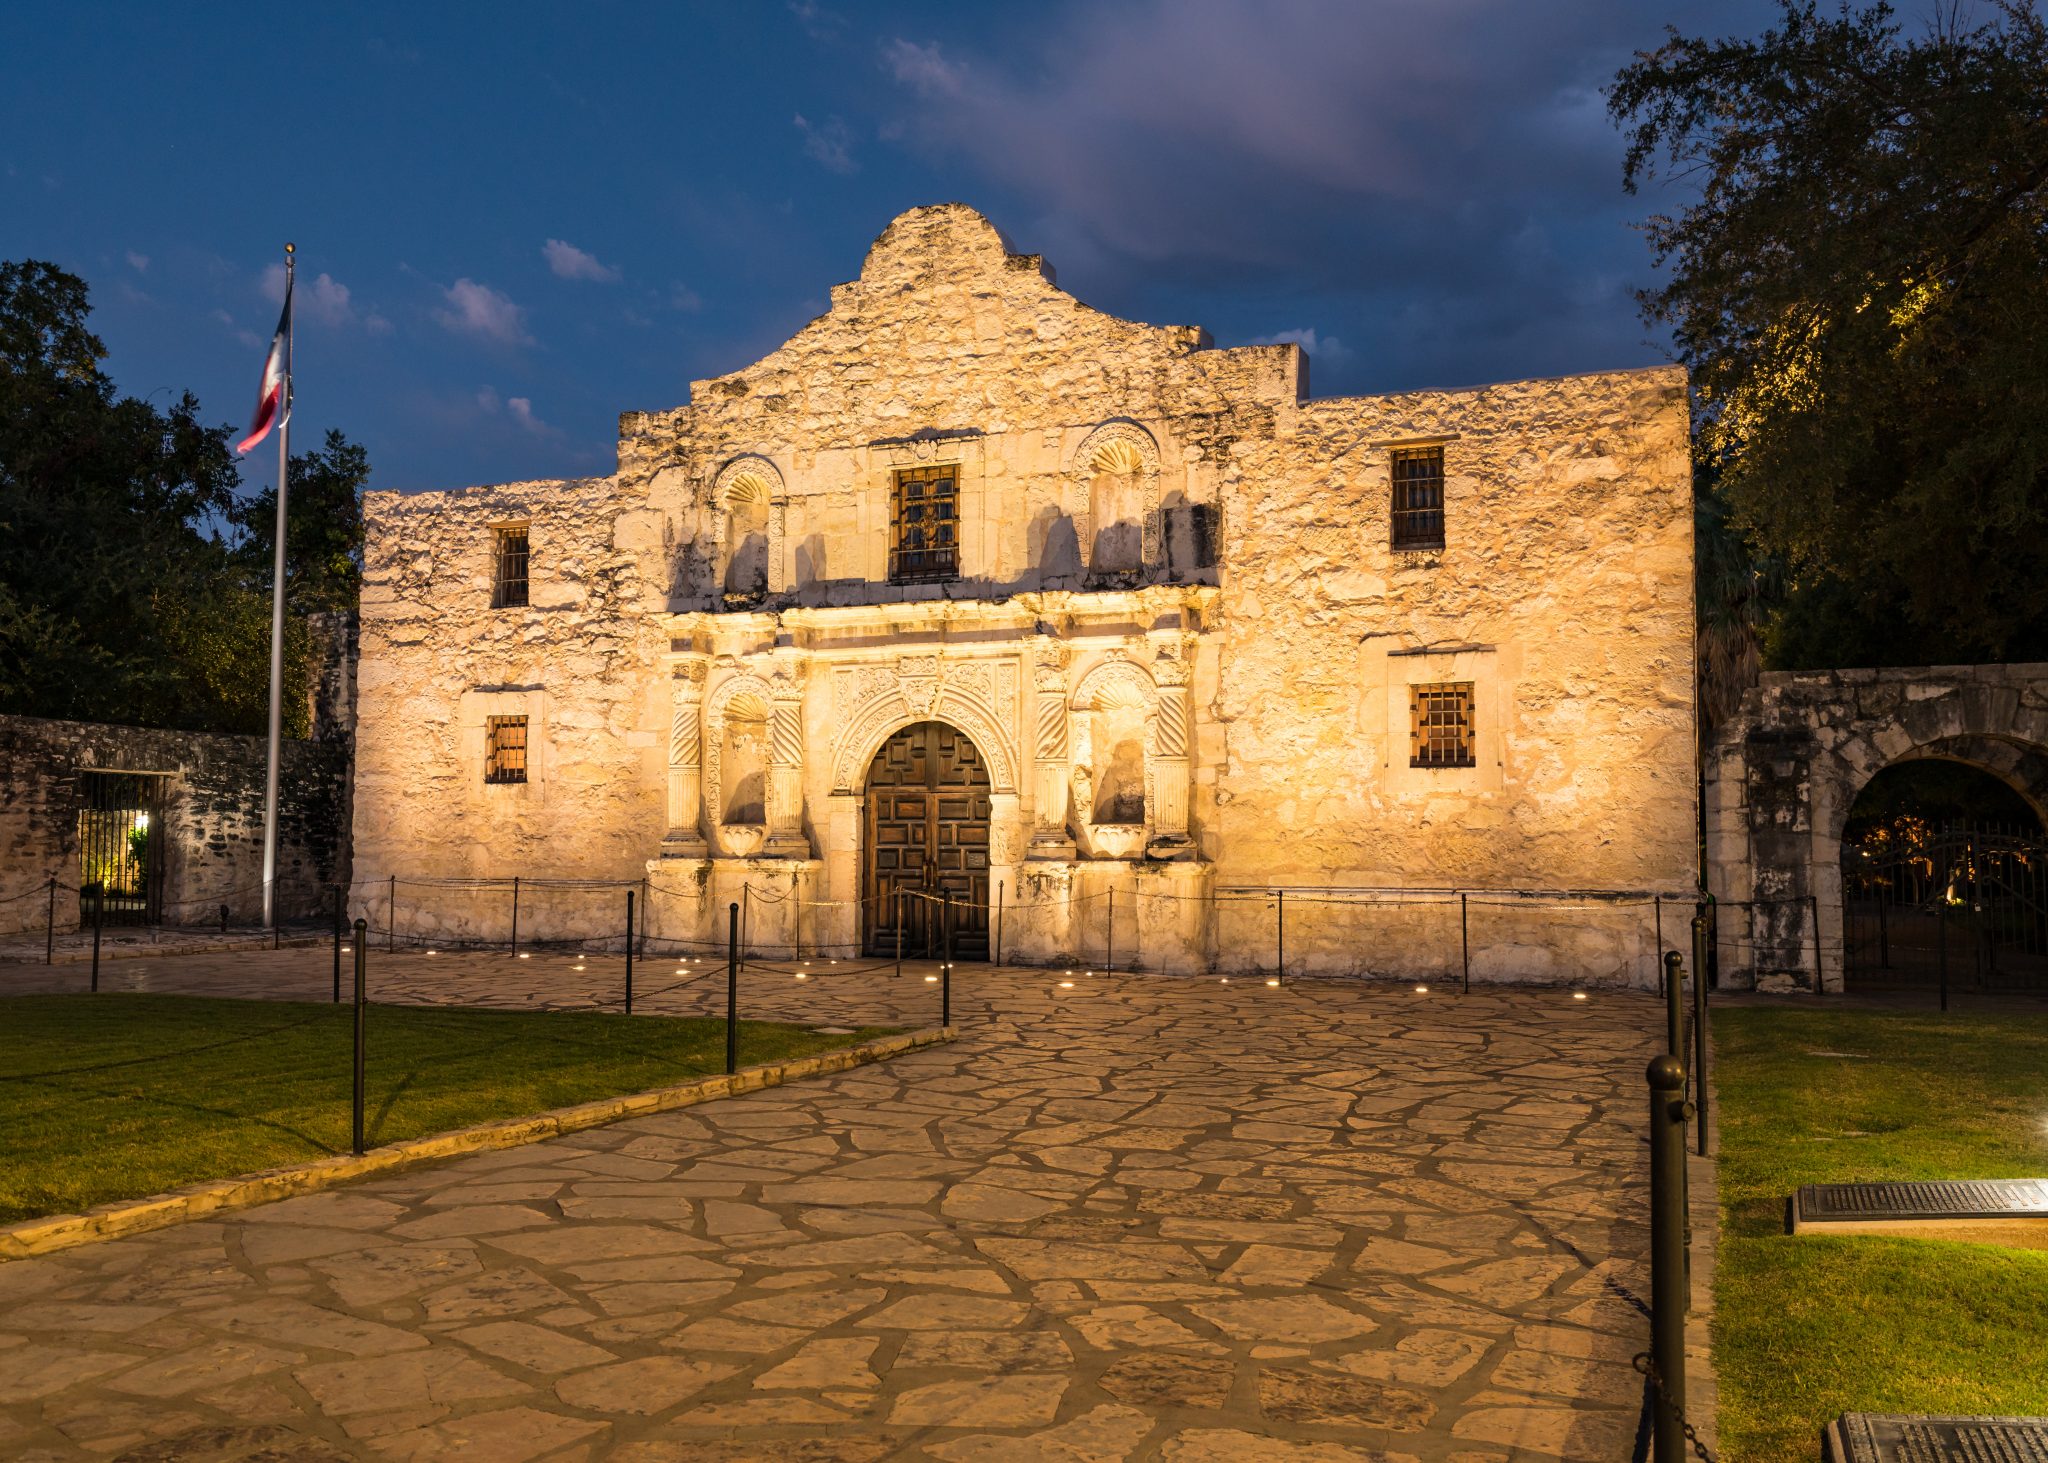 The Alamo lit up at dusk